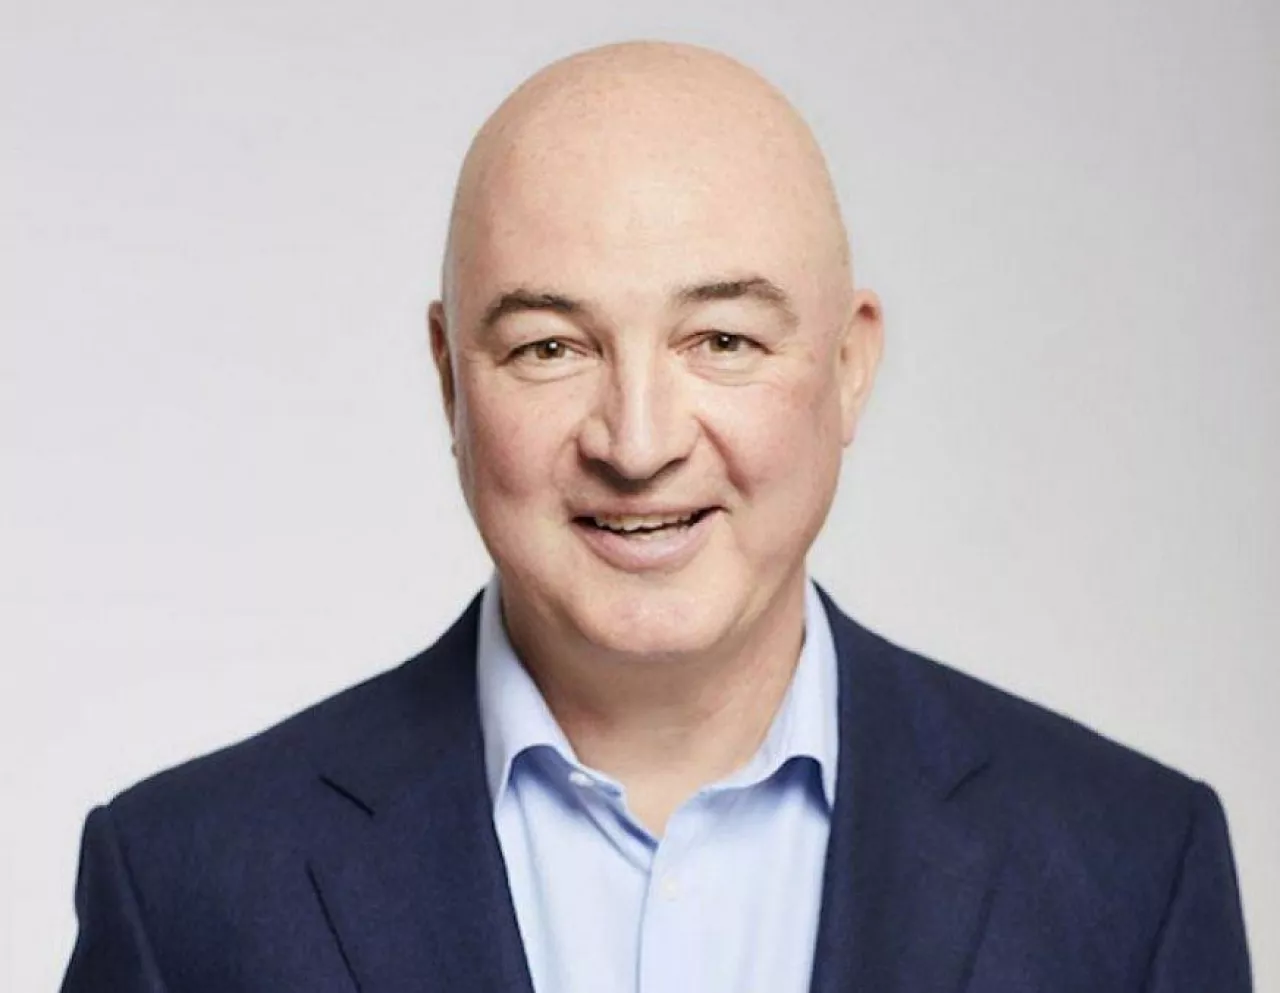 Alan Jope, CEO, Unilever